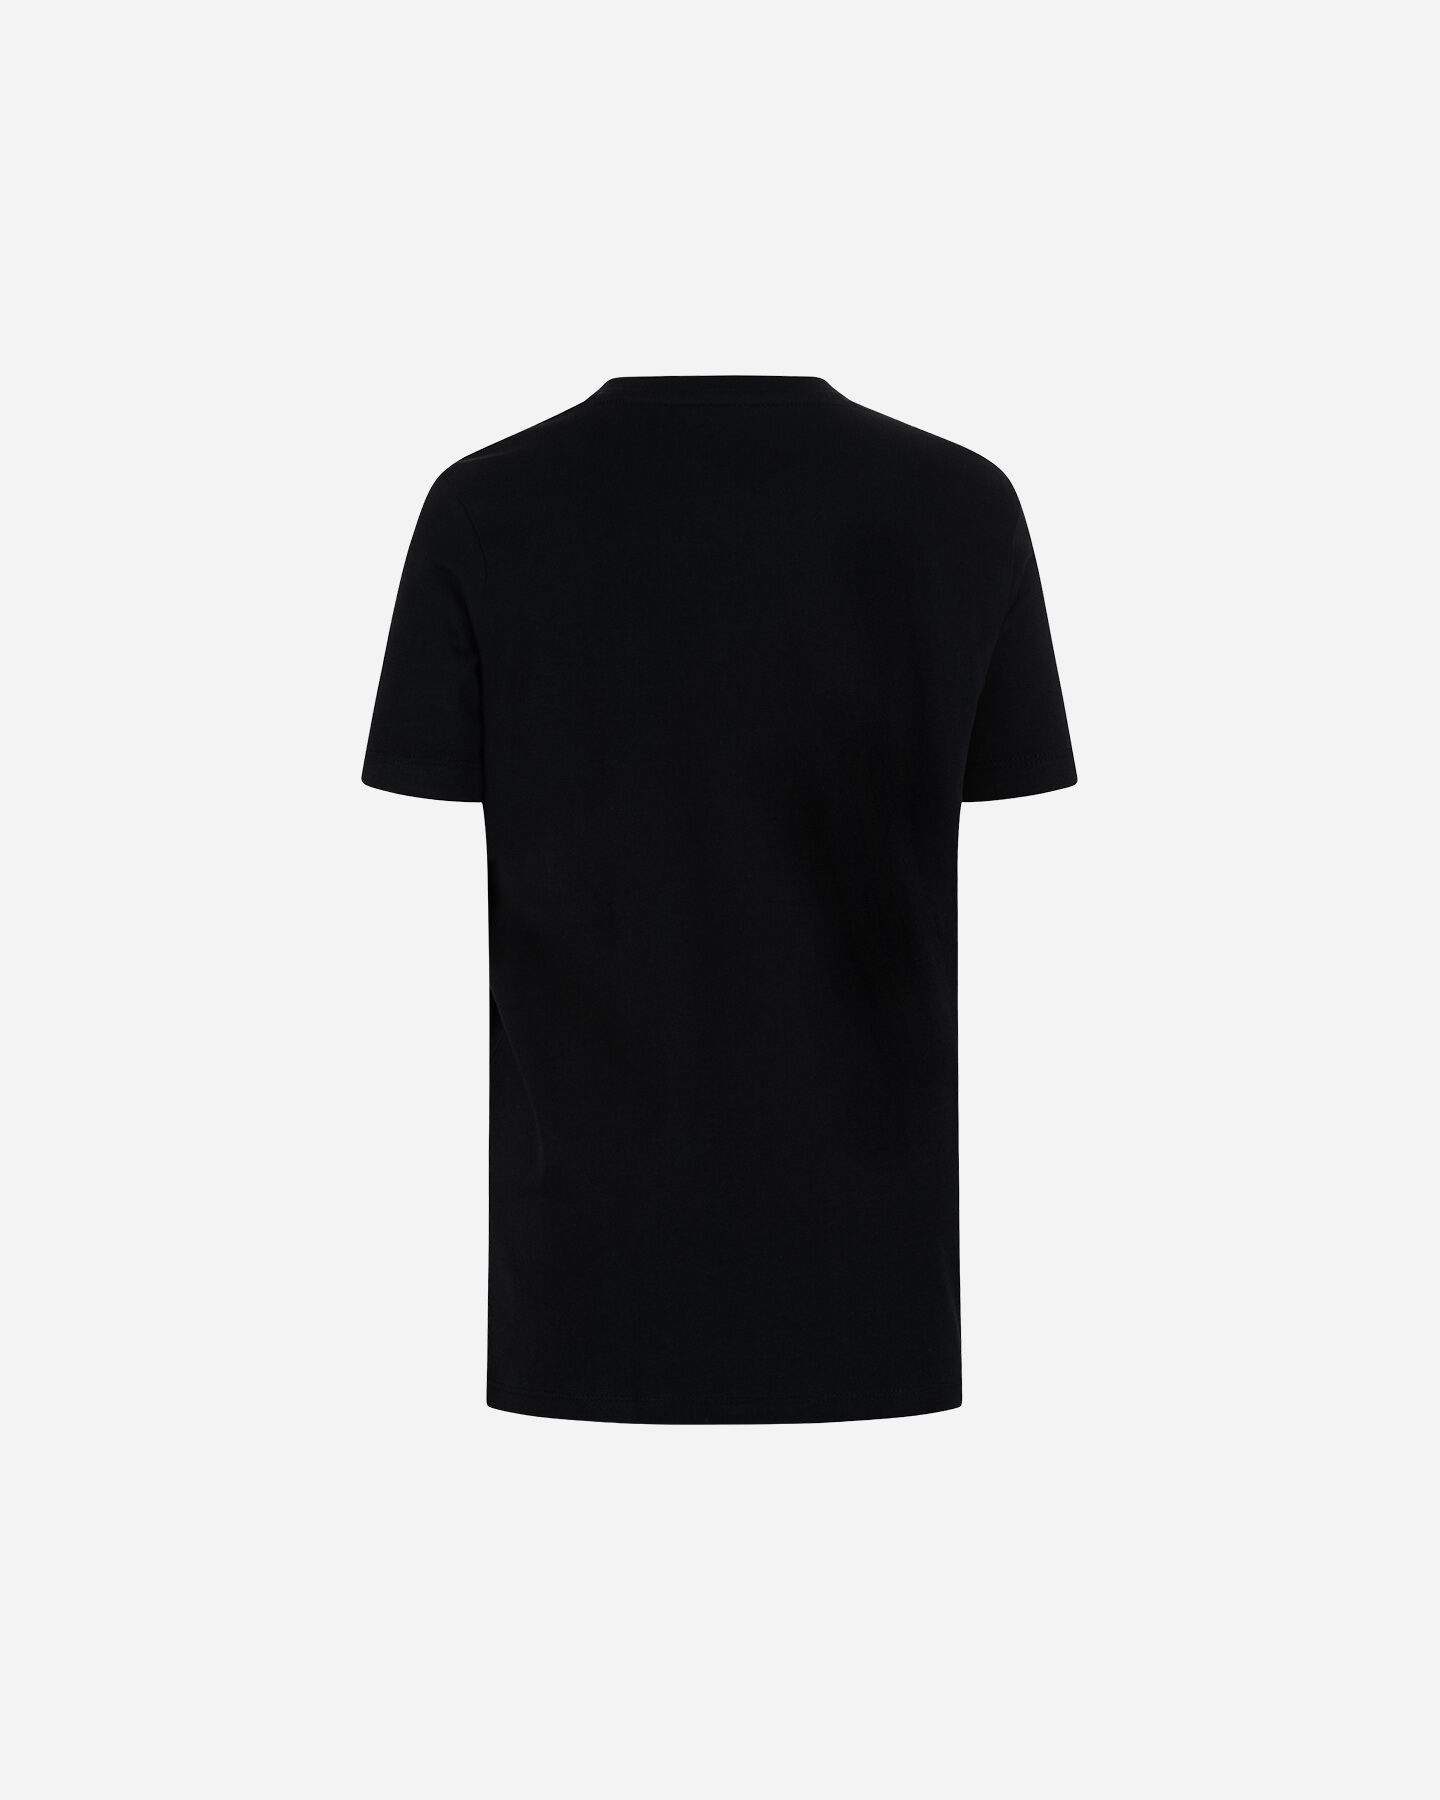  T-Shirt BEAR STREETWEAR URBAN STYLE JR S4126600|50|6 scatto 1